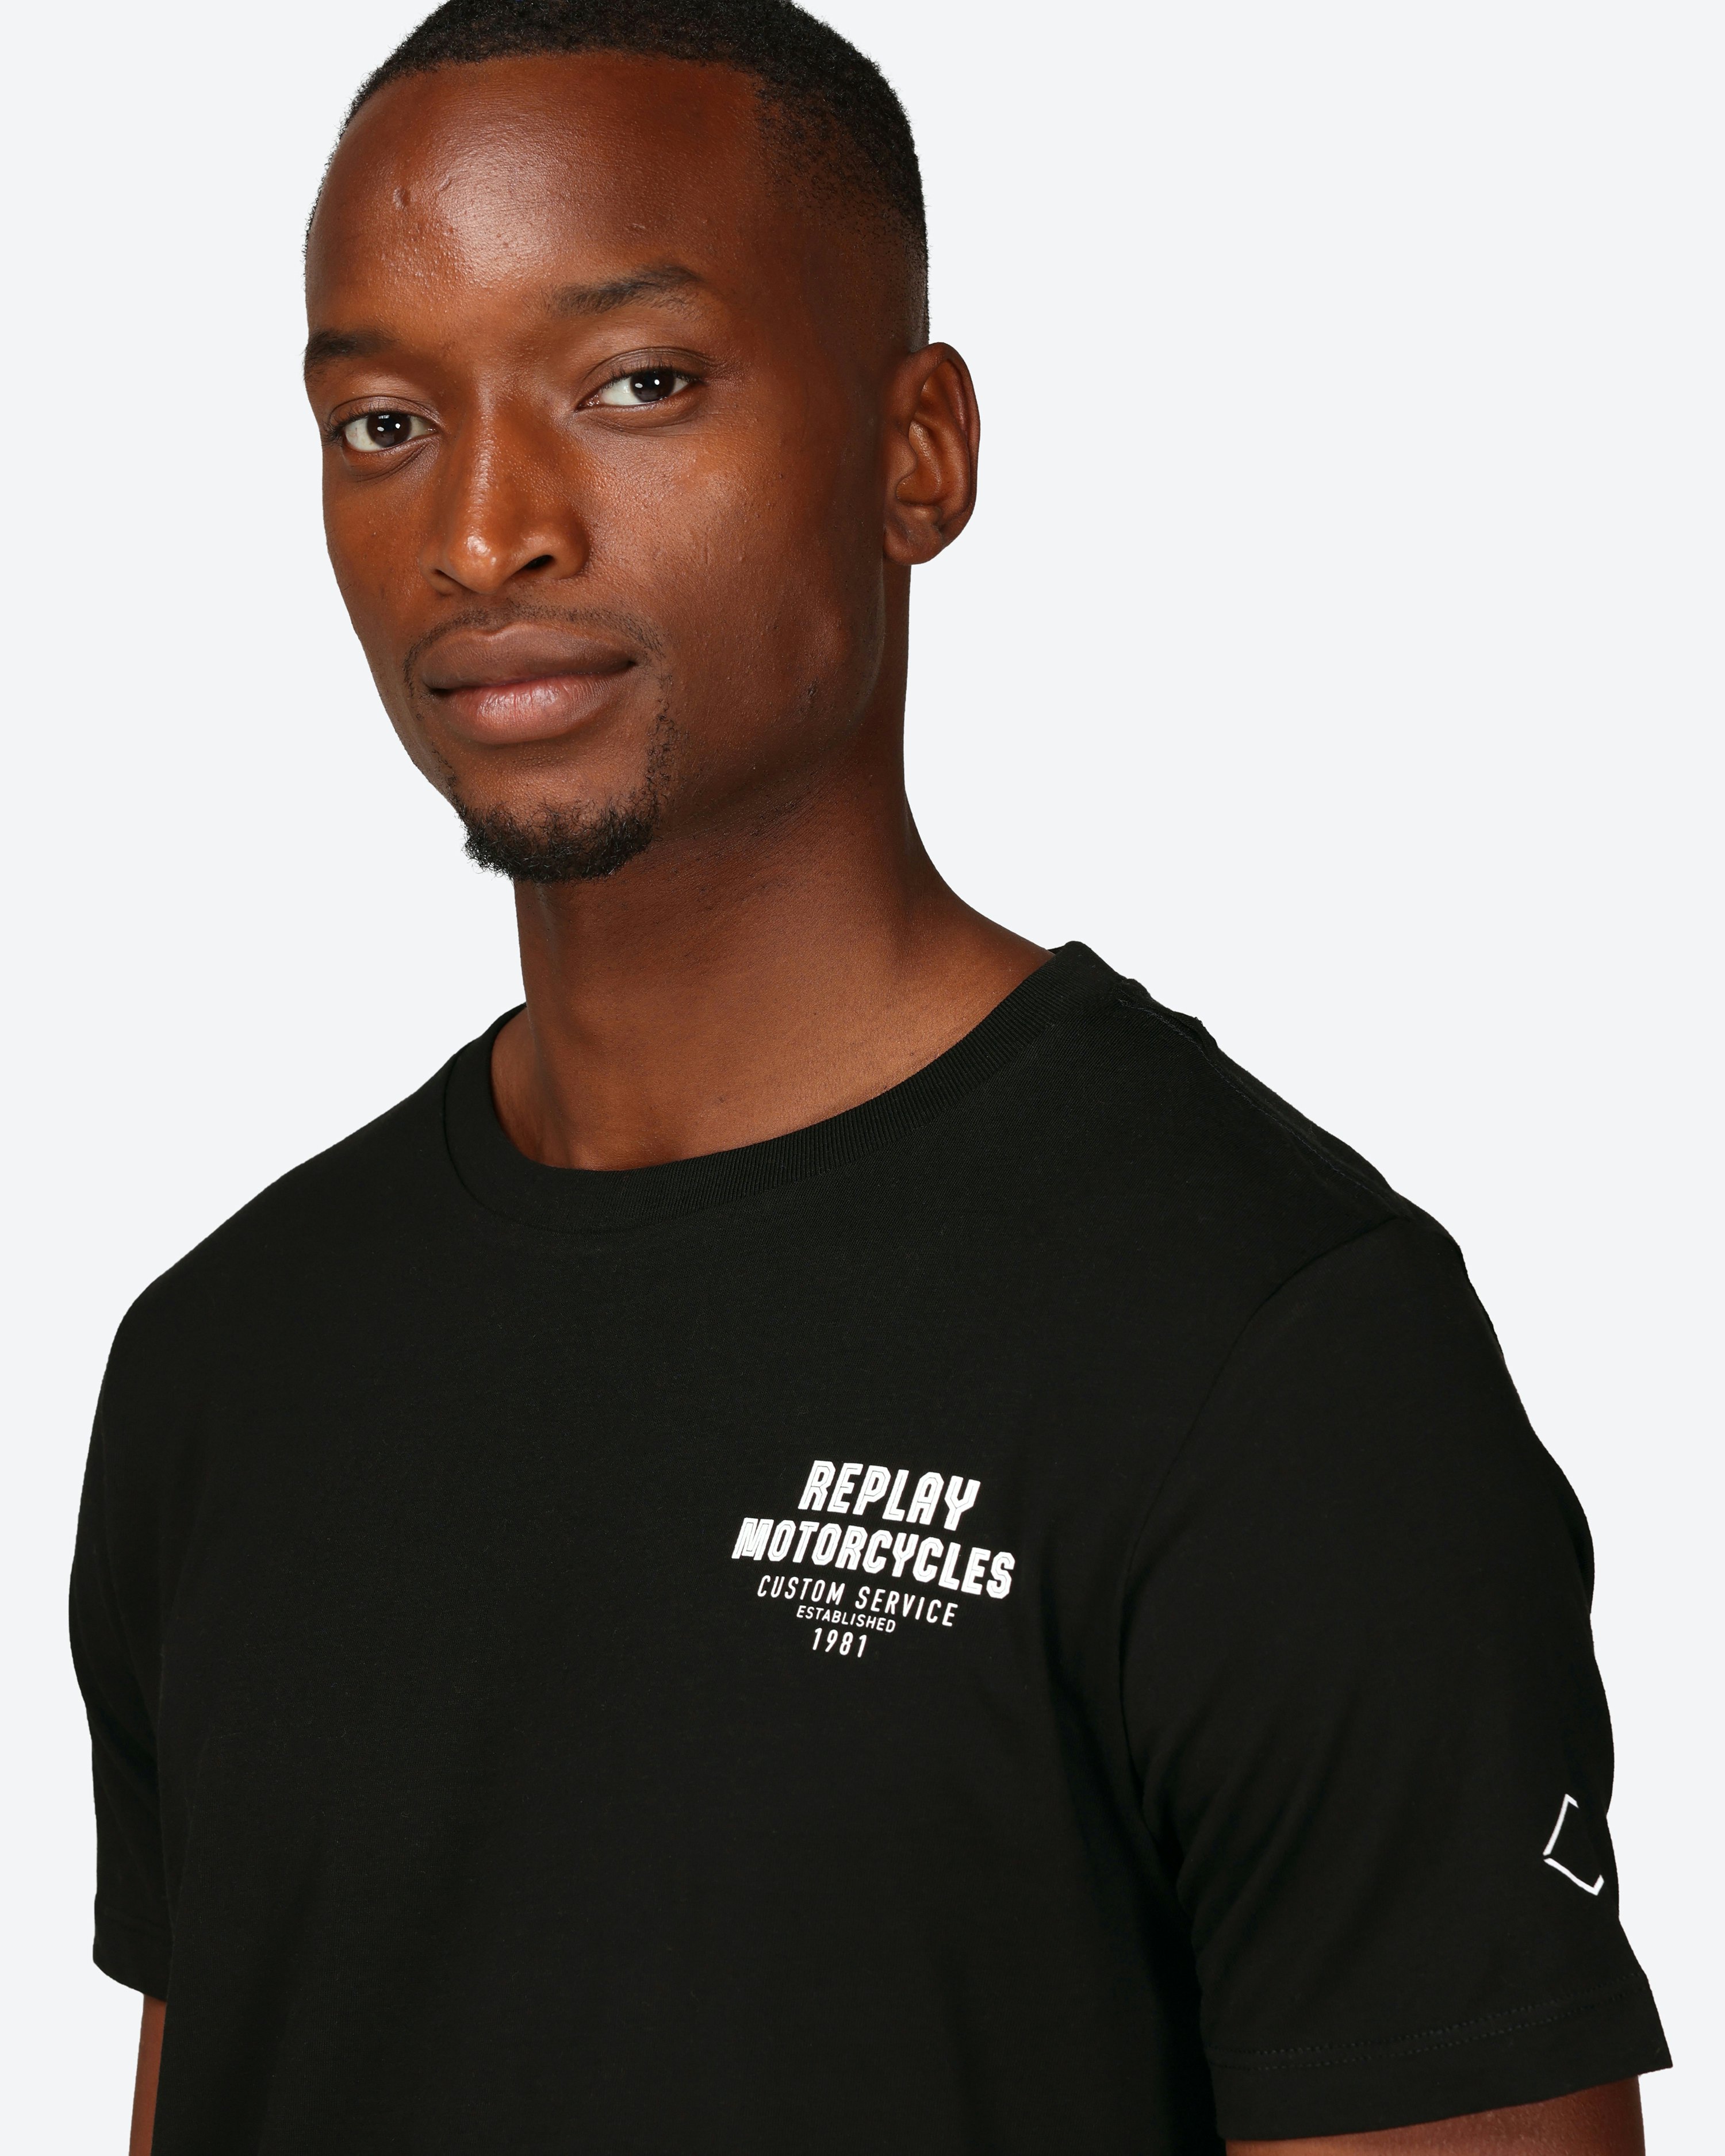 Replay Black T-shirt With Biker Print | Men | Volt